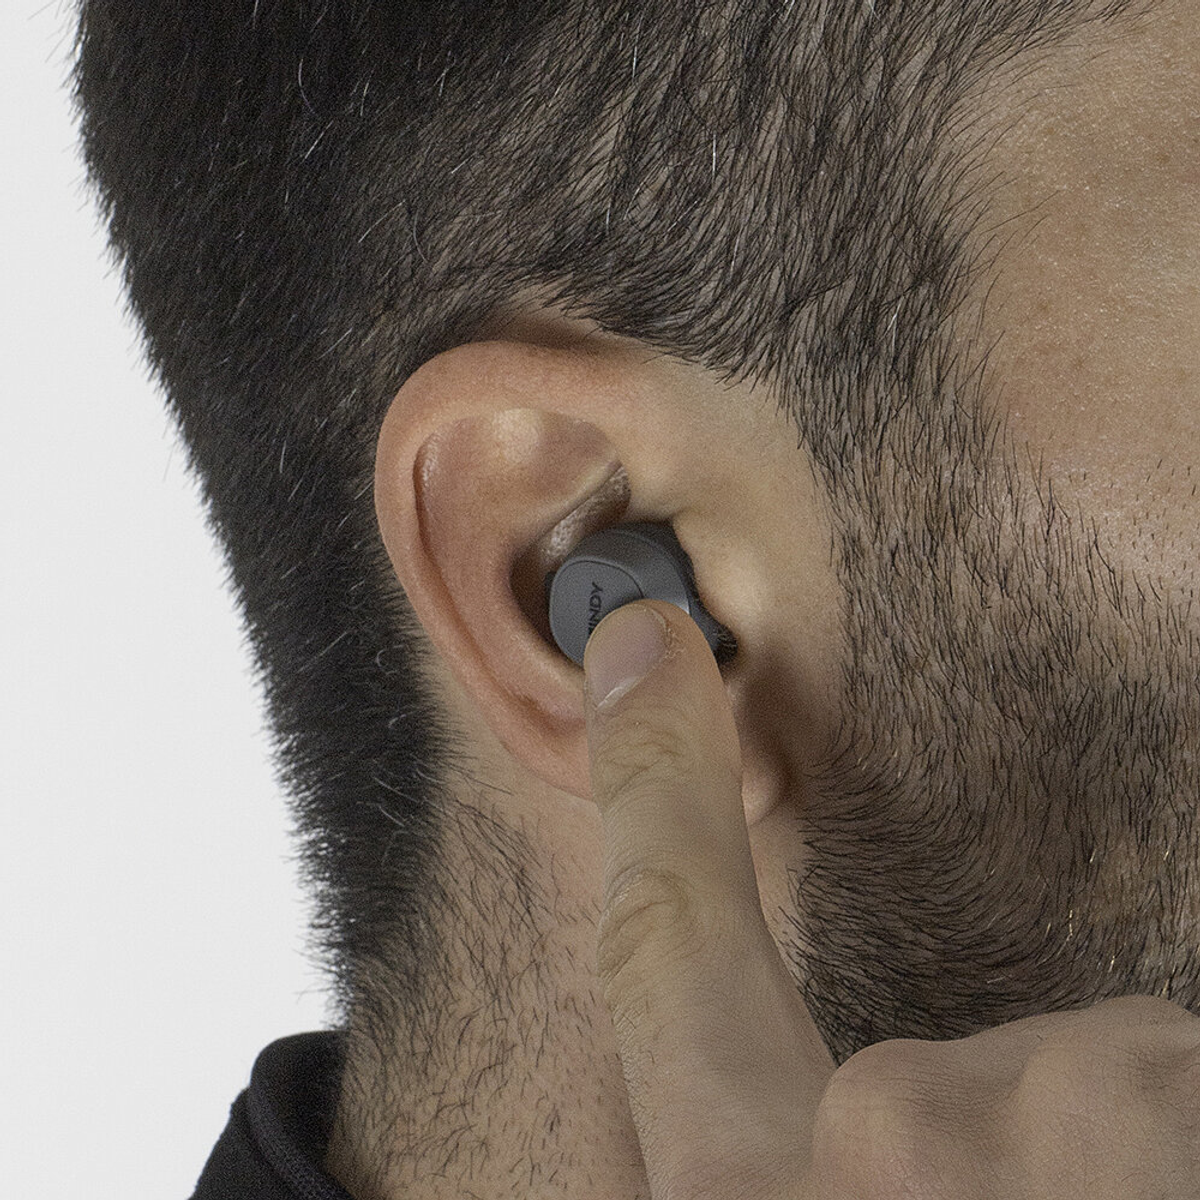 73194, LINDY Bluetooth Kopfhörer In-ear Schwarz